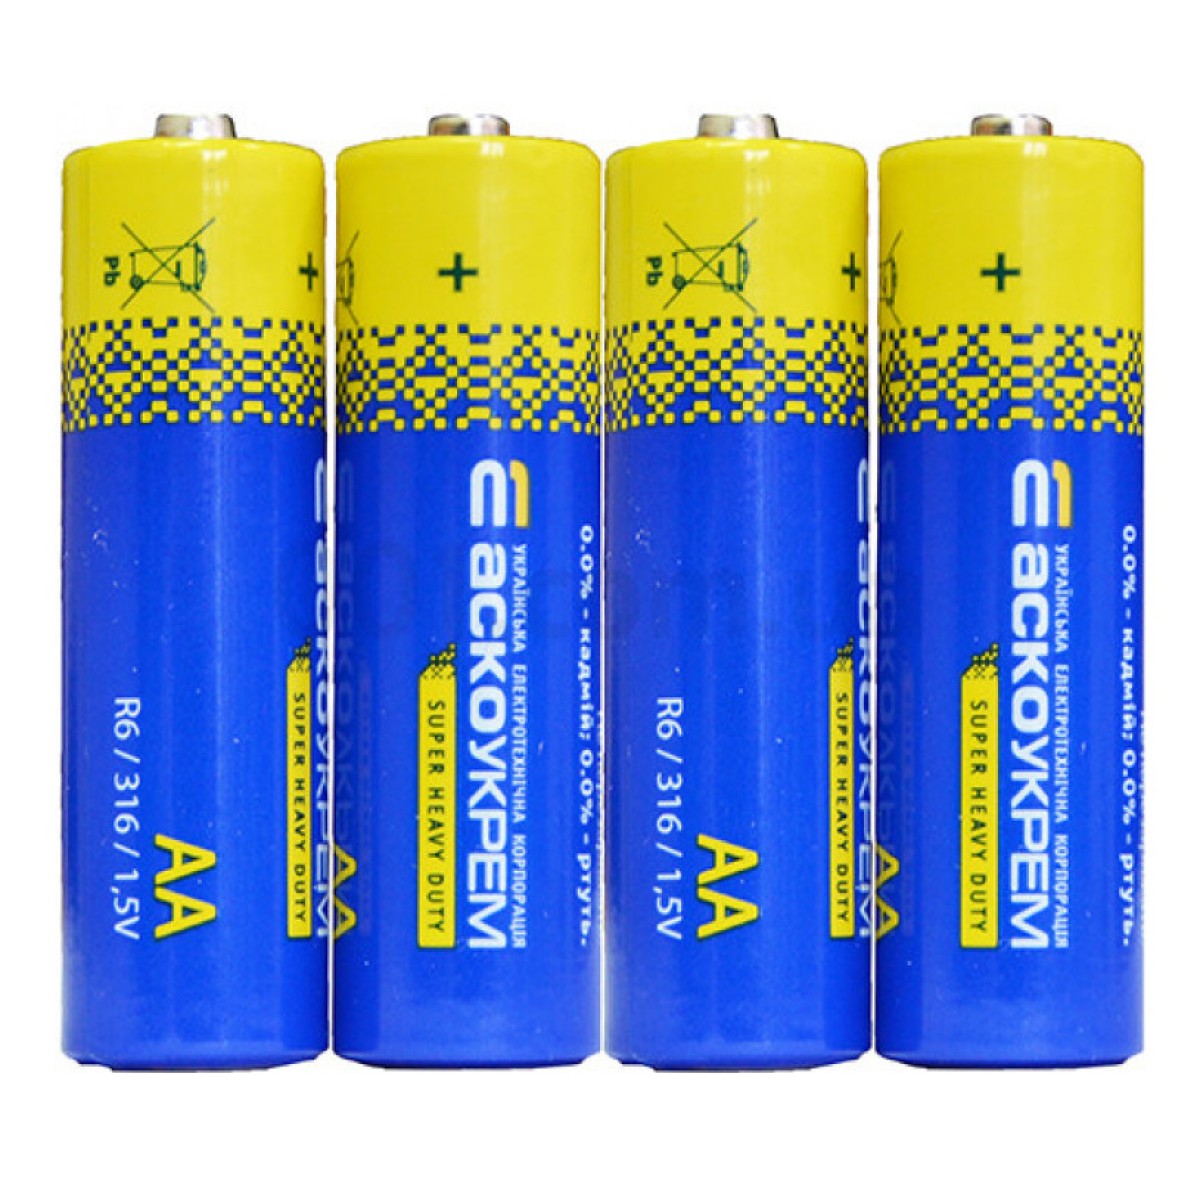 Батарейка солевая AА.R6.SP4, типоразмер AA упаковка shrink 4 шт., АСКО-УКРЕМ 256_252.jpg